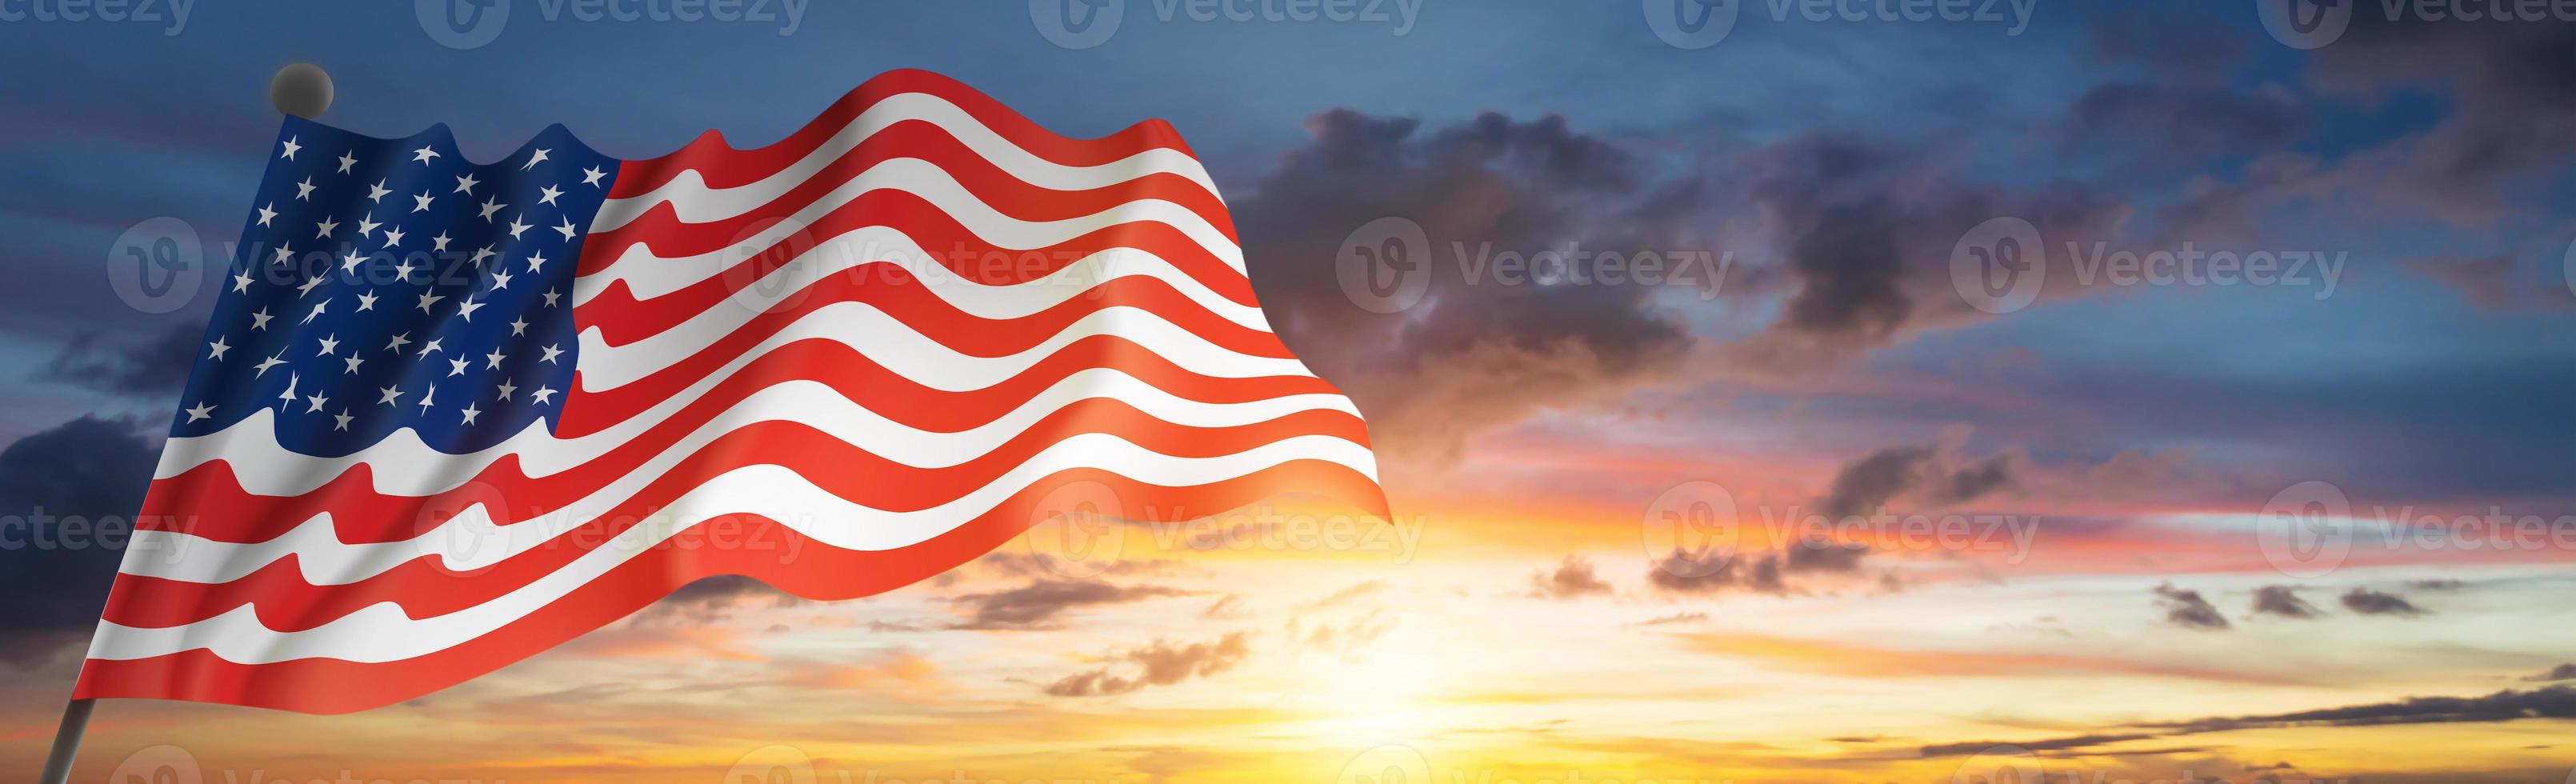 US American flag photo